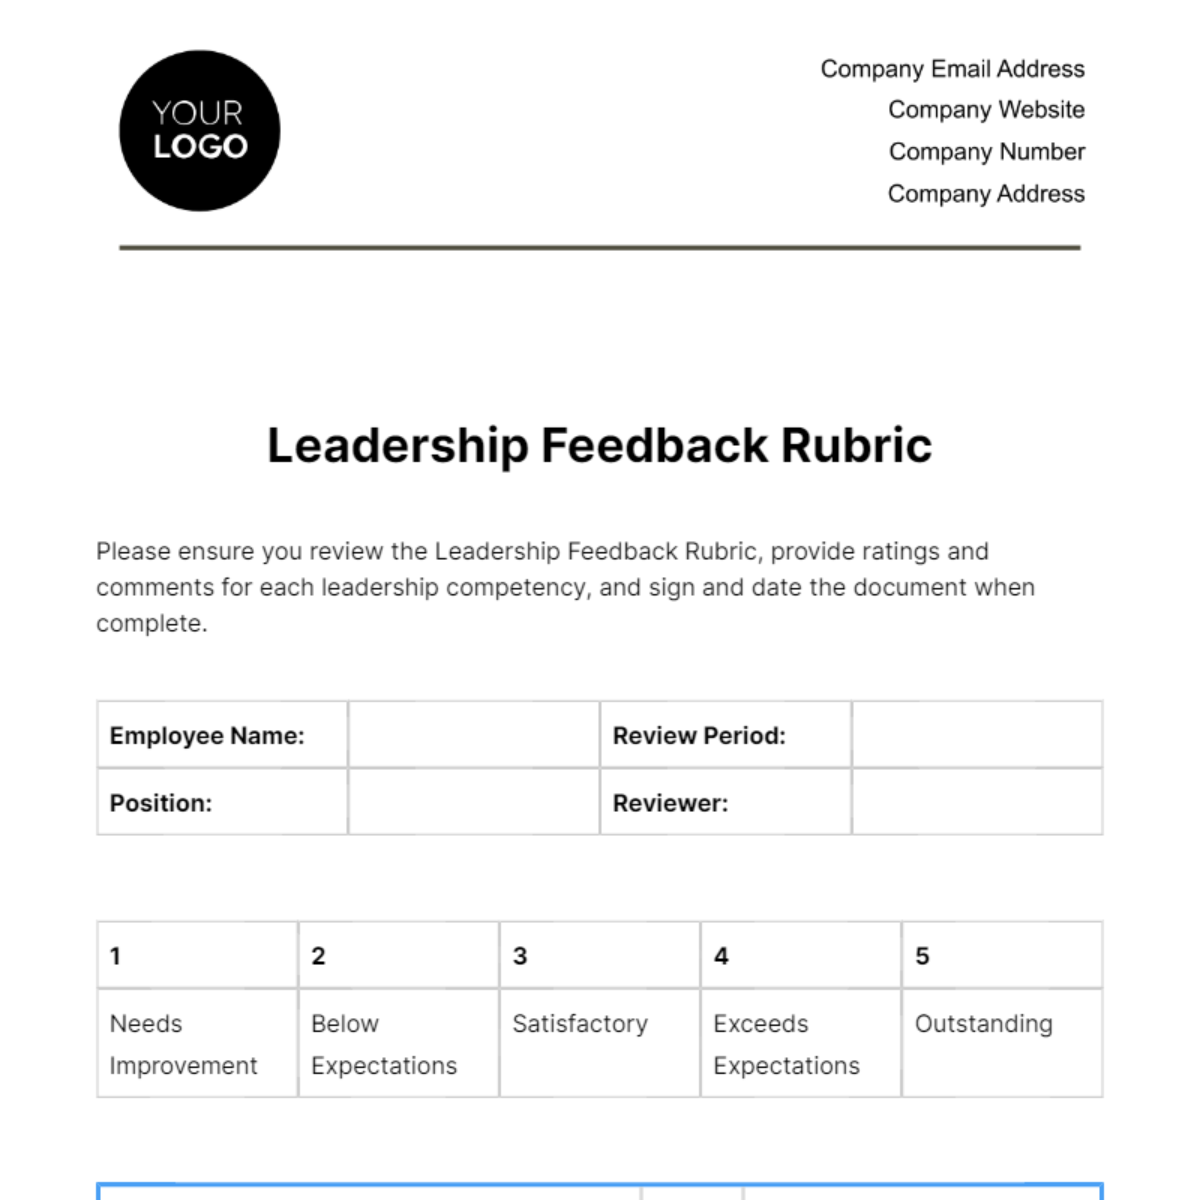 Leadership Feedback Rubric HR Template